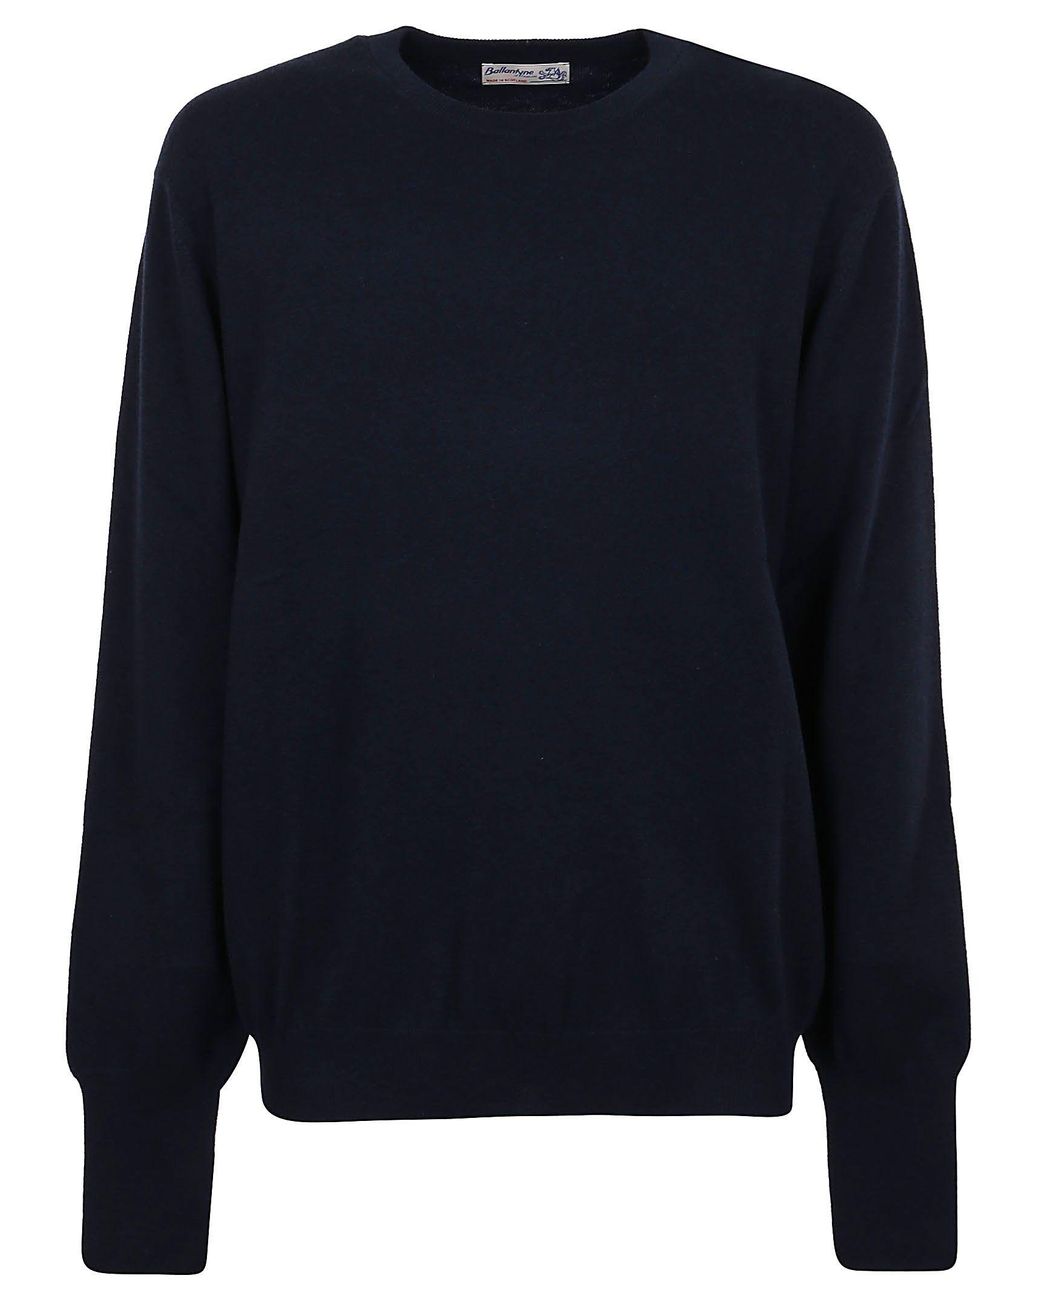 Ballantyne Cashmere Sweater in Blue for Men - Lyst